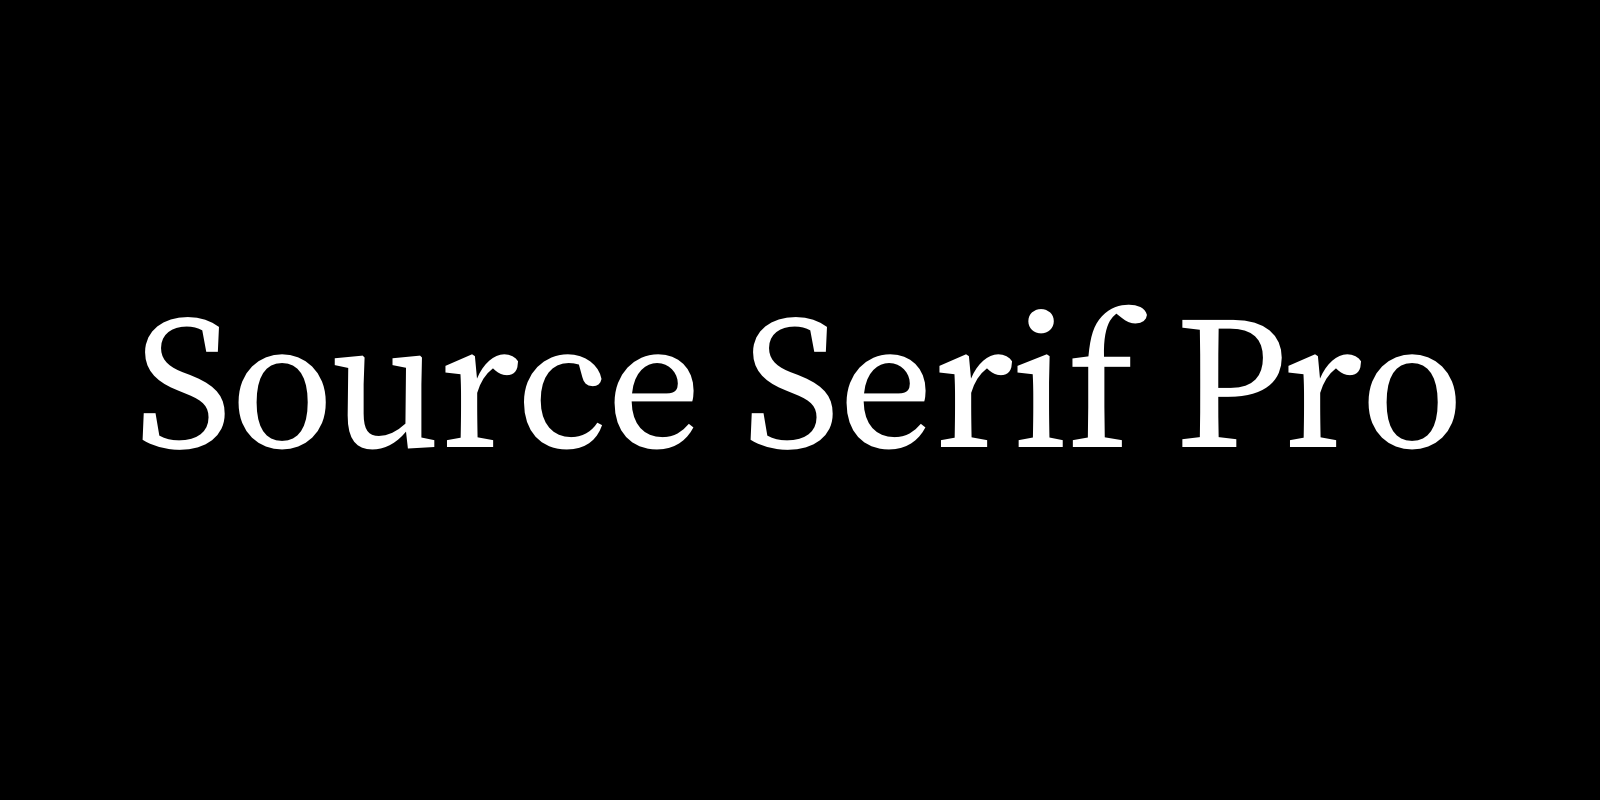 Source Serif Pro by Frank Grießhammer